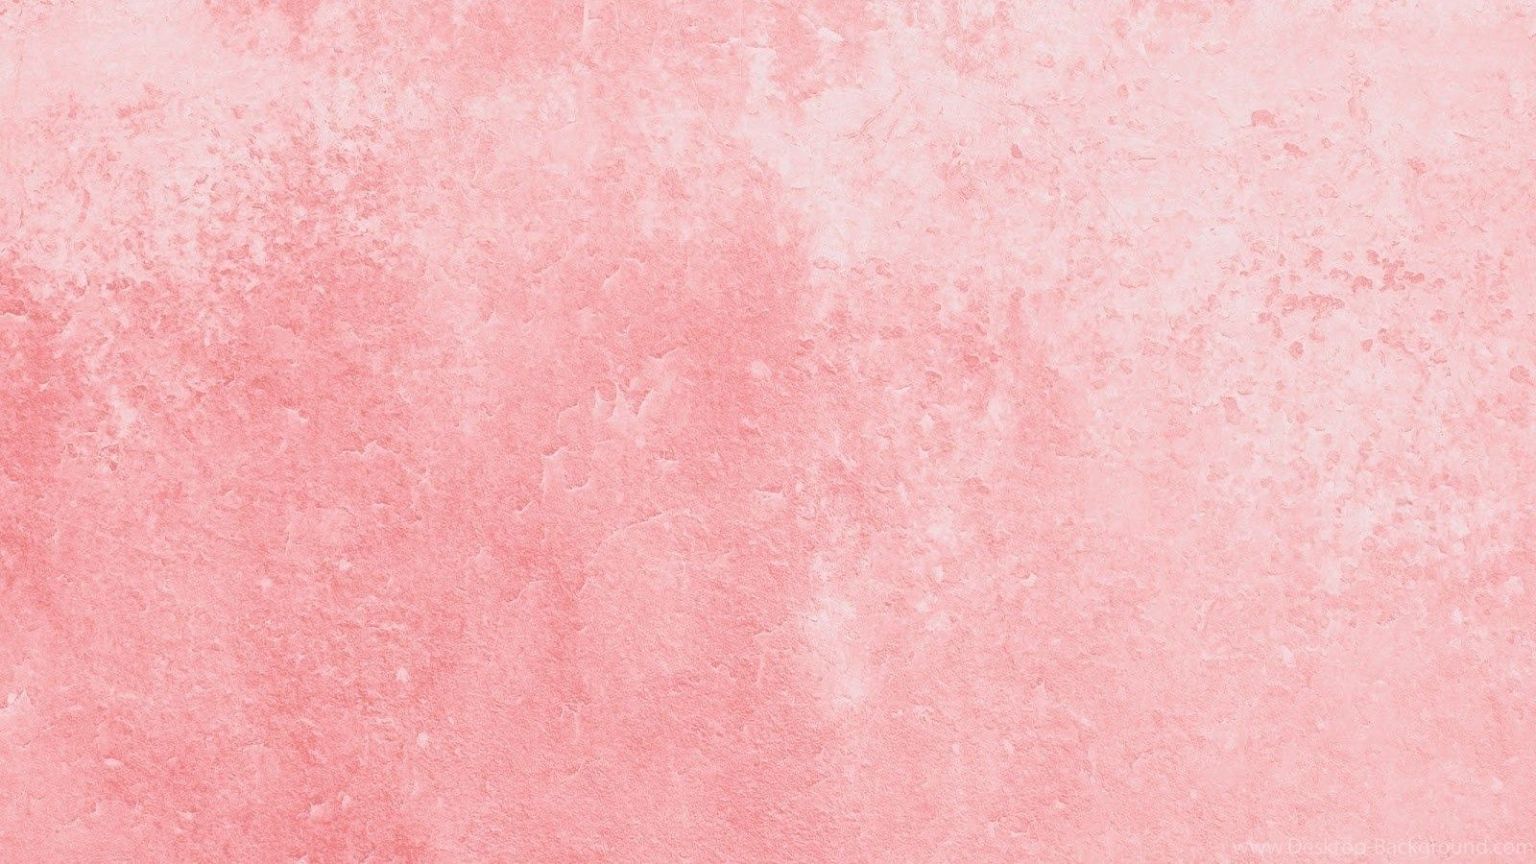 Free download Aesthetic Pink Desktop Wallpaper Top Aesthetic Pink [1600x900] for your Desktop, Mobile & Tablet. Explore Pink Wallpaper For Desktop. Pink Floyd Image Wallpaper, VS Pink Wallpaper for